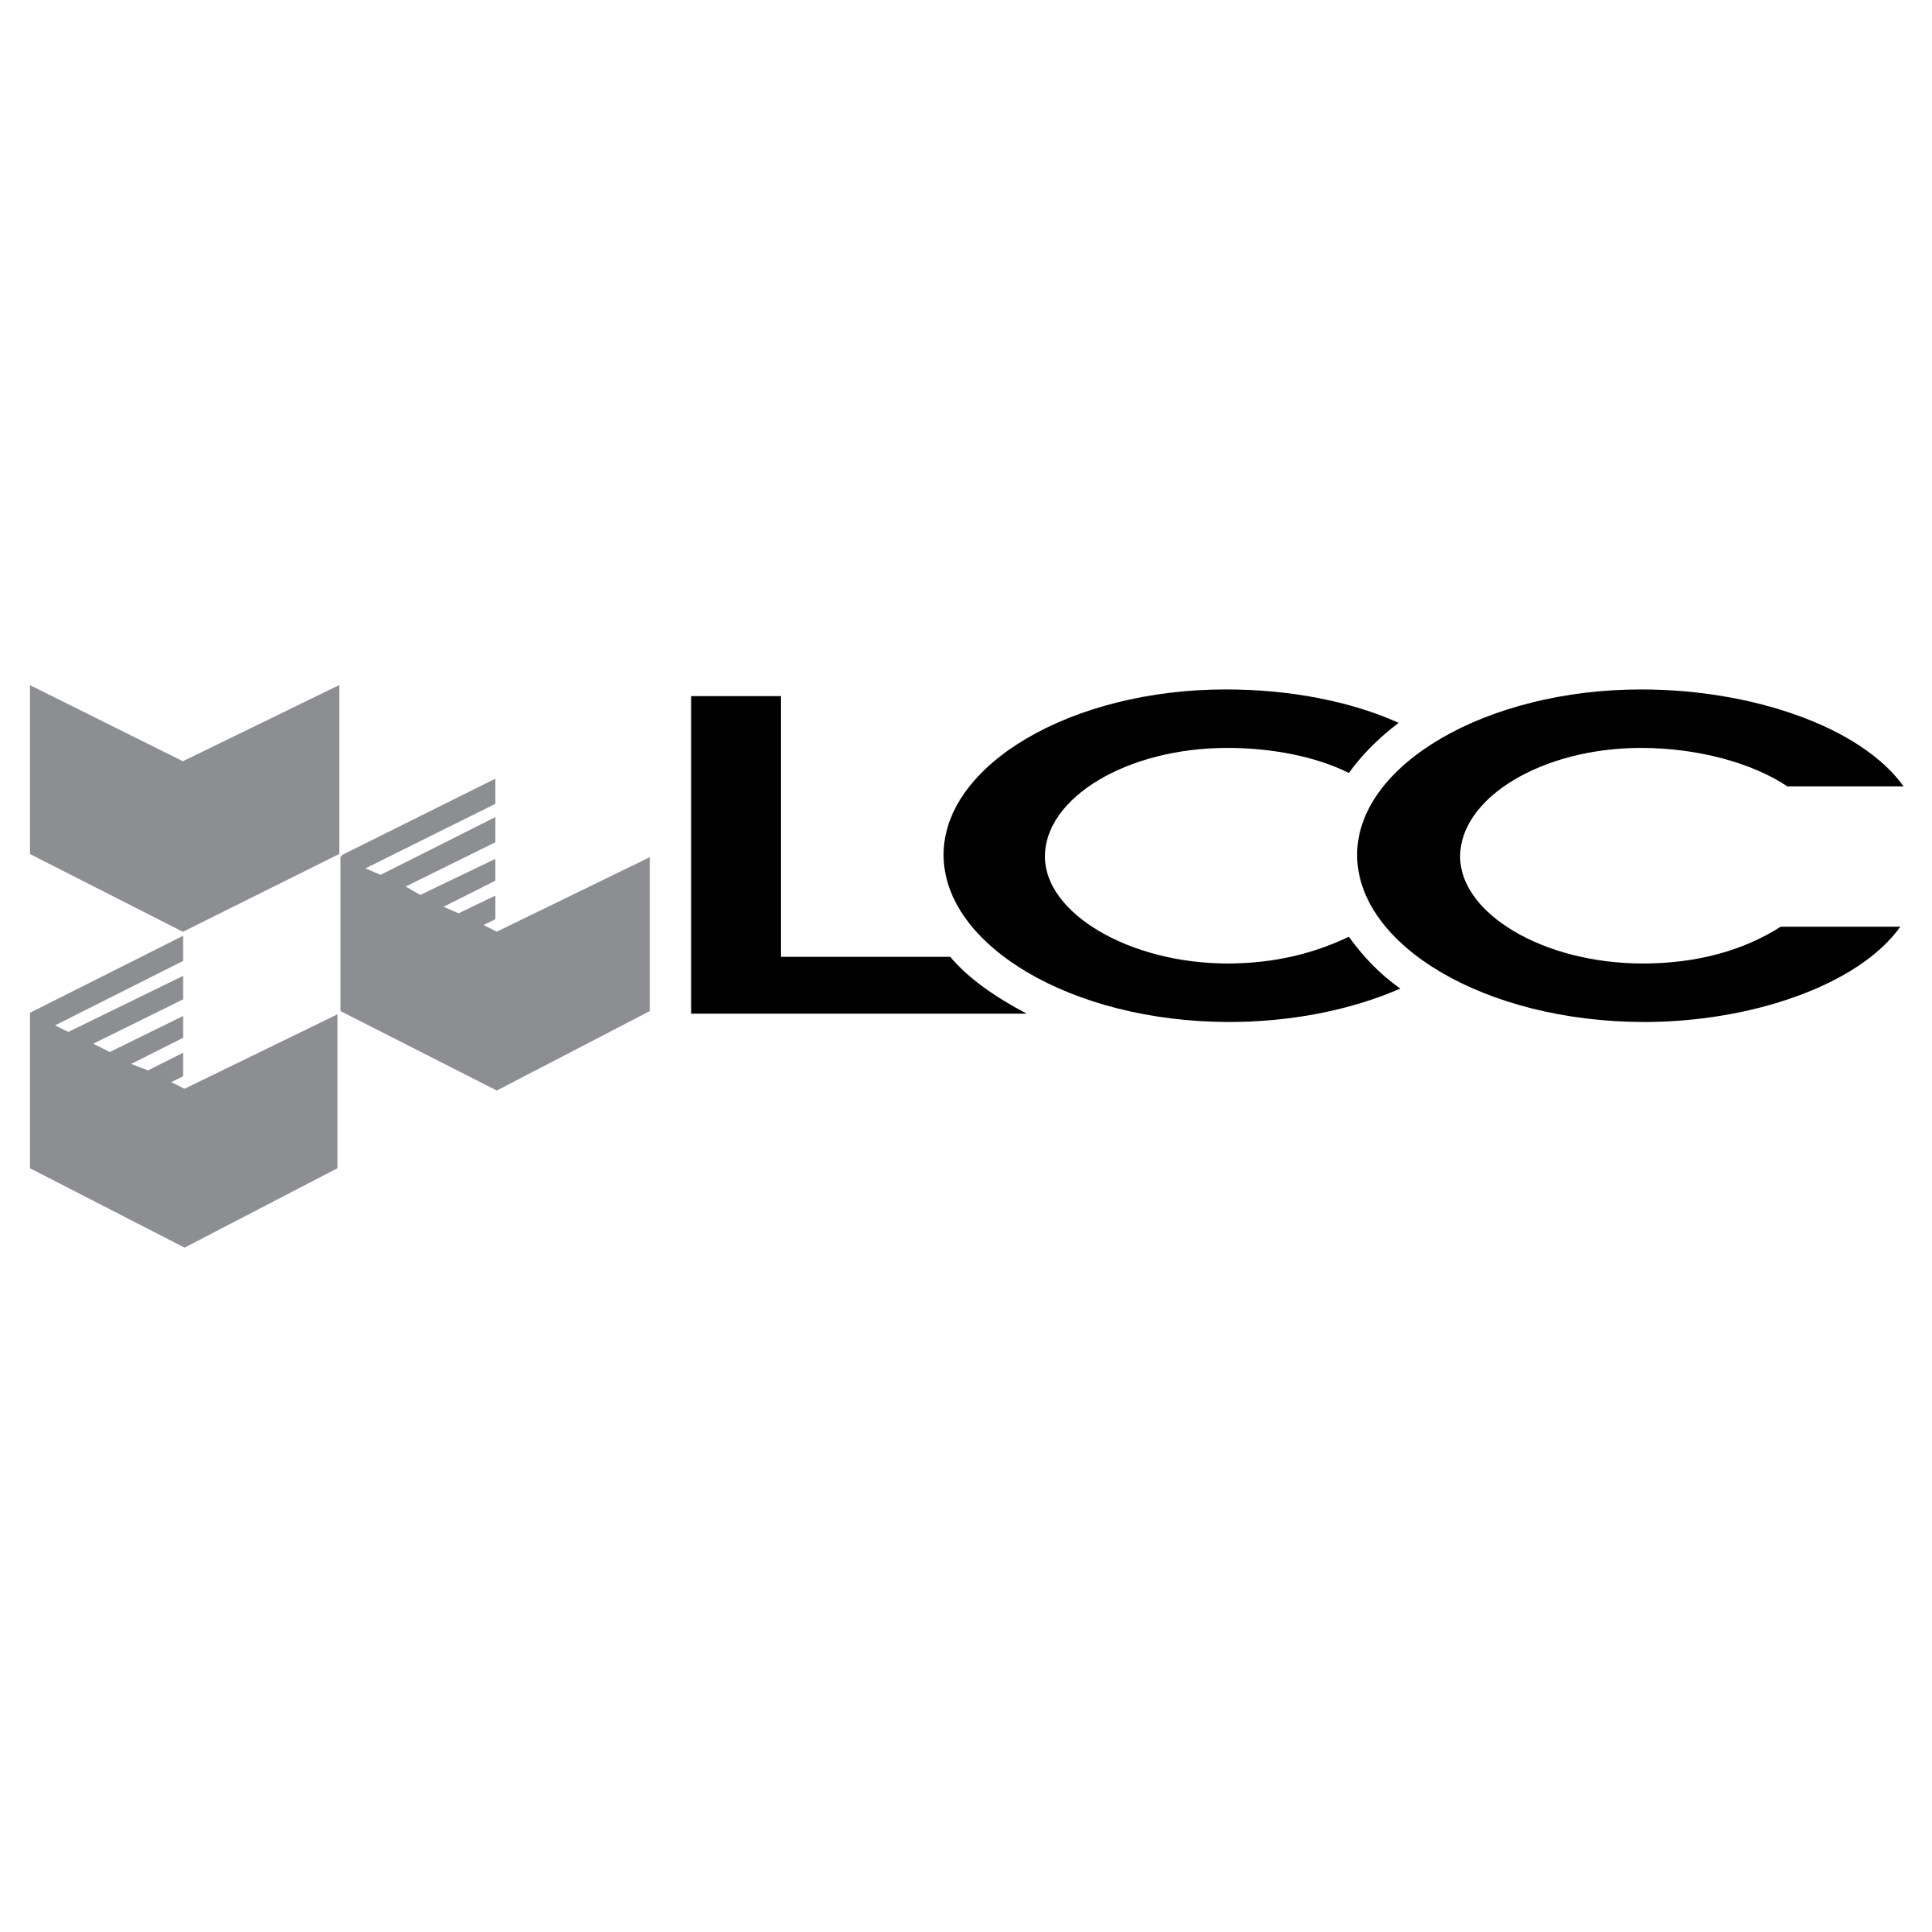 LCC Logo - LCC Logo PNG Transparent & SVG Vector